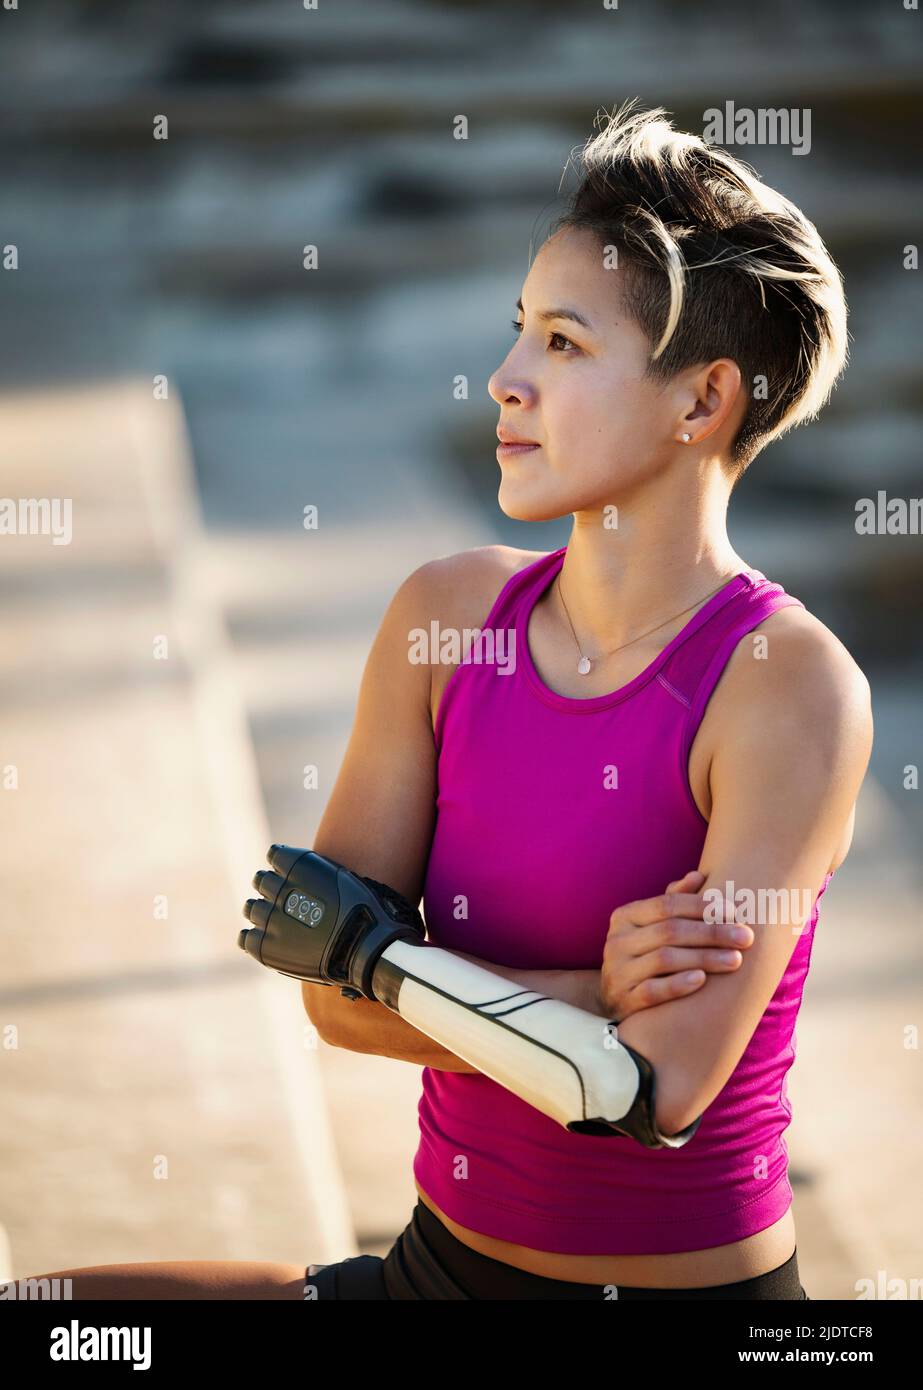 Portrait of athlete woman with prosthetic arm Stock Photo